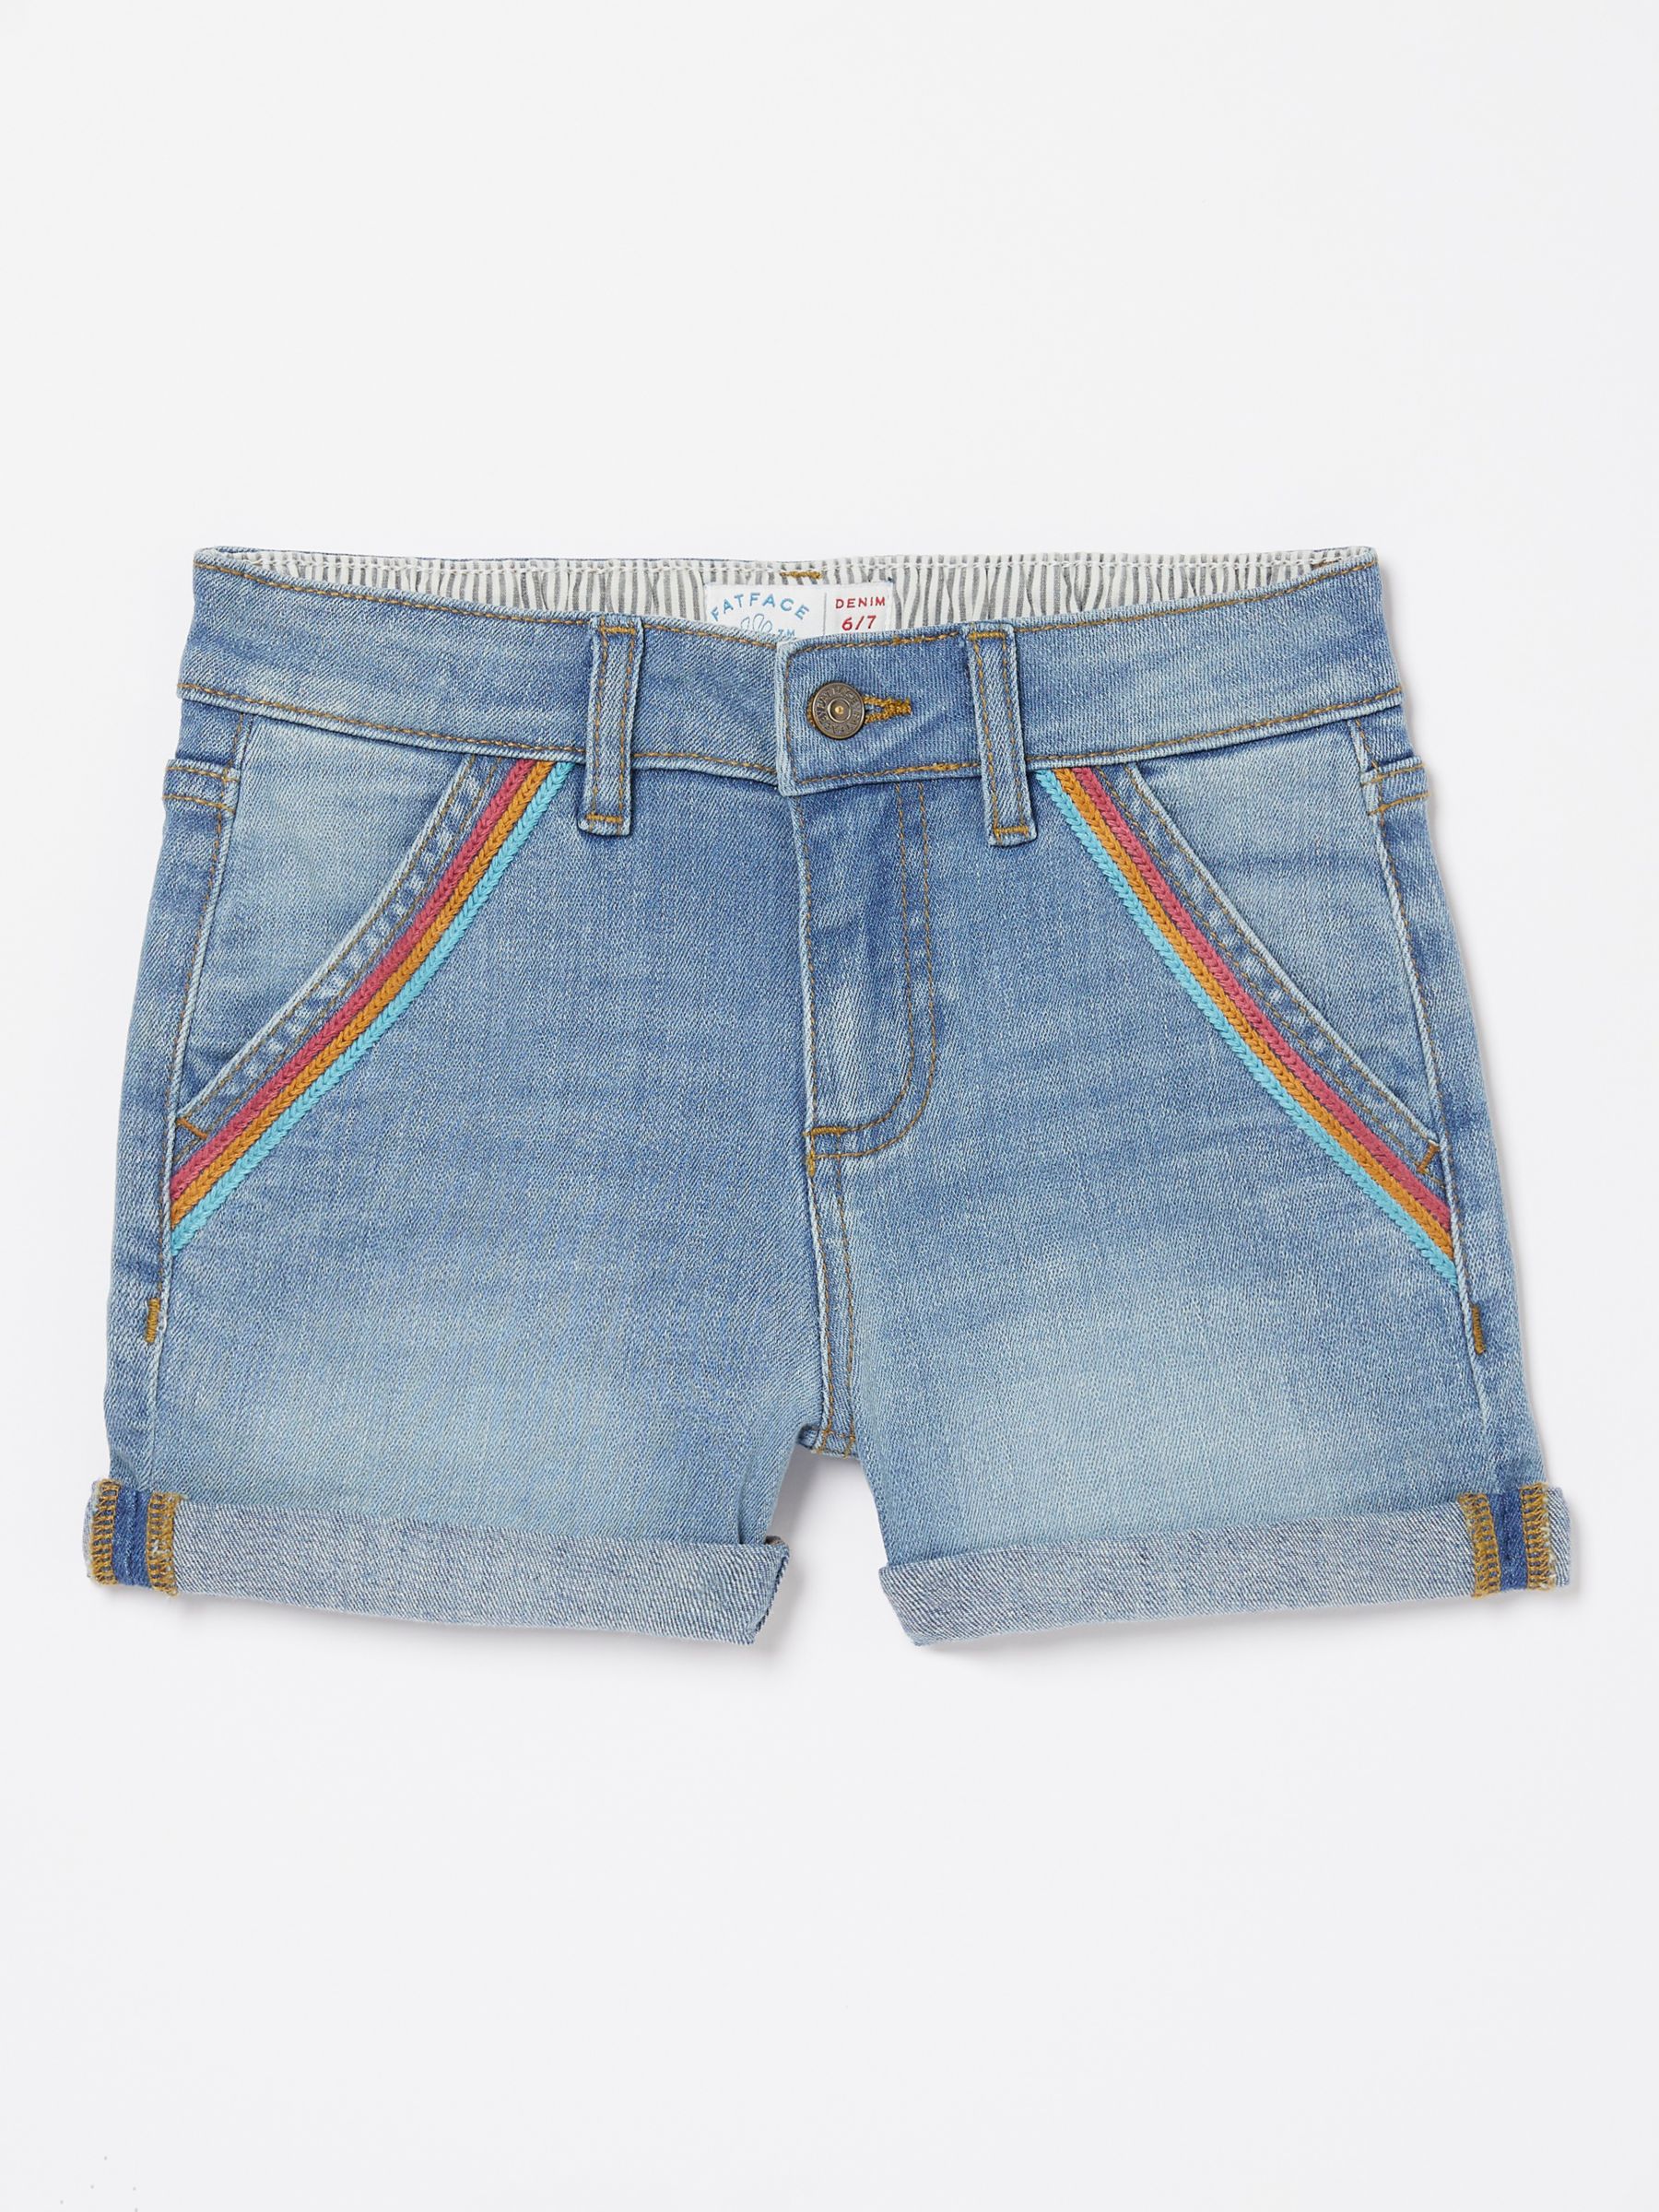 Tassle Denim Shorts - Light Vintage Wash